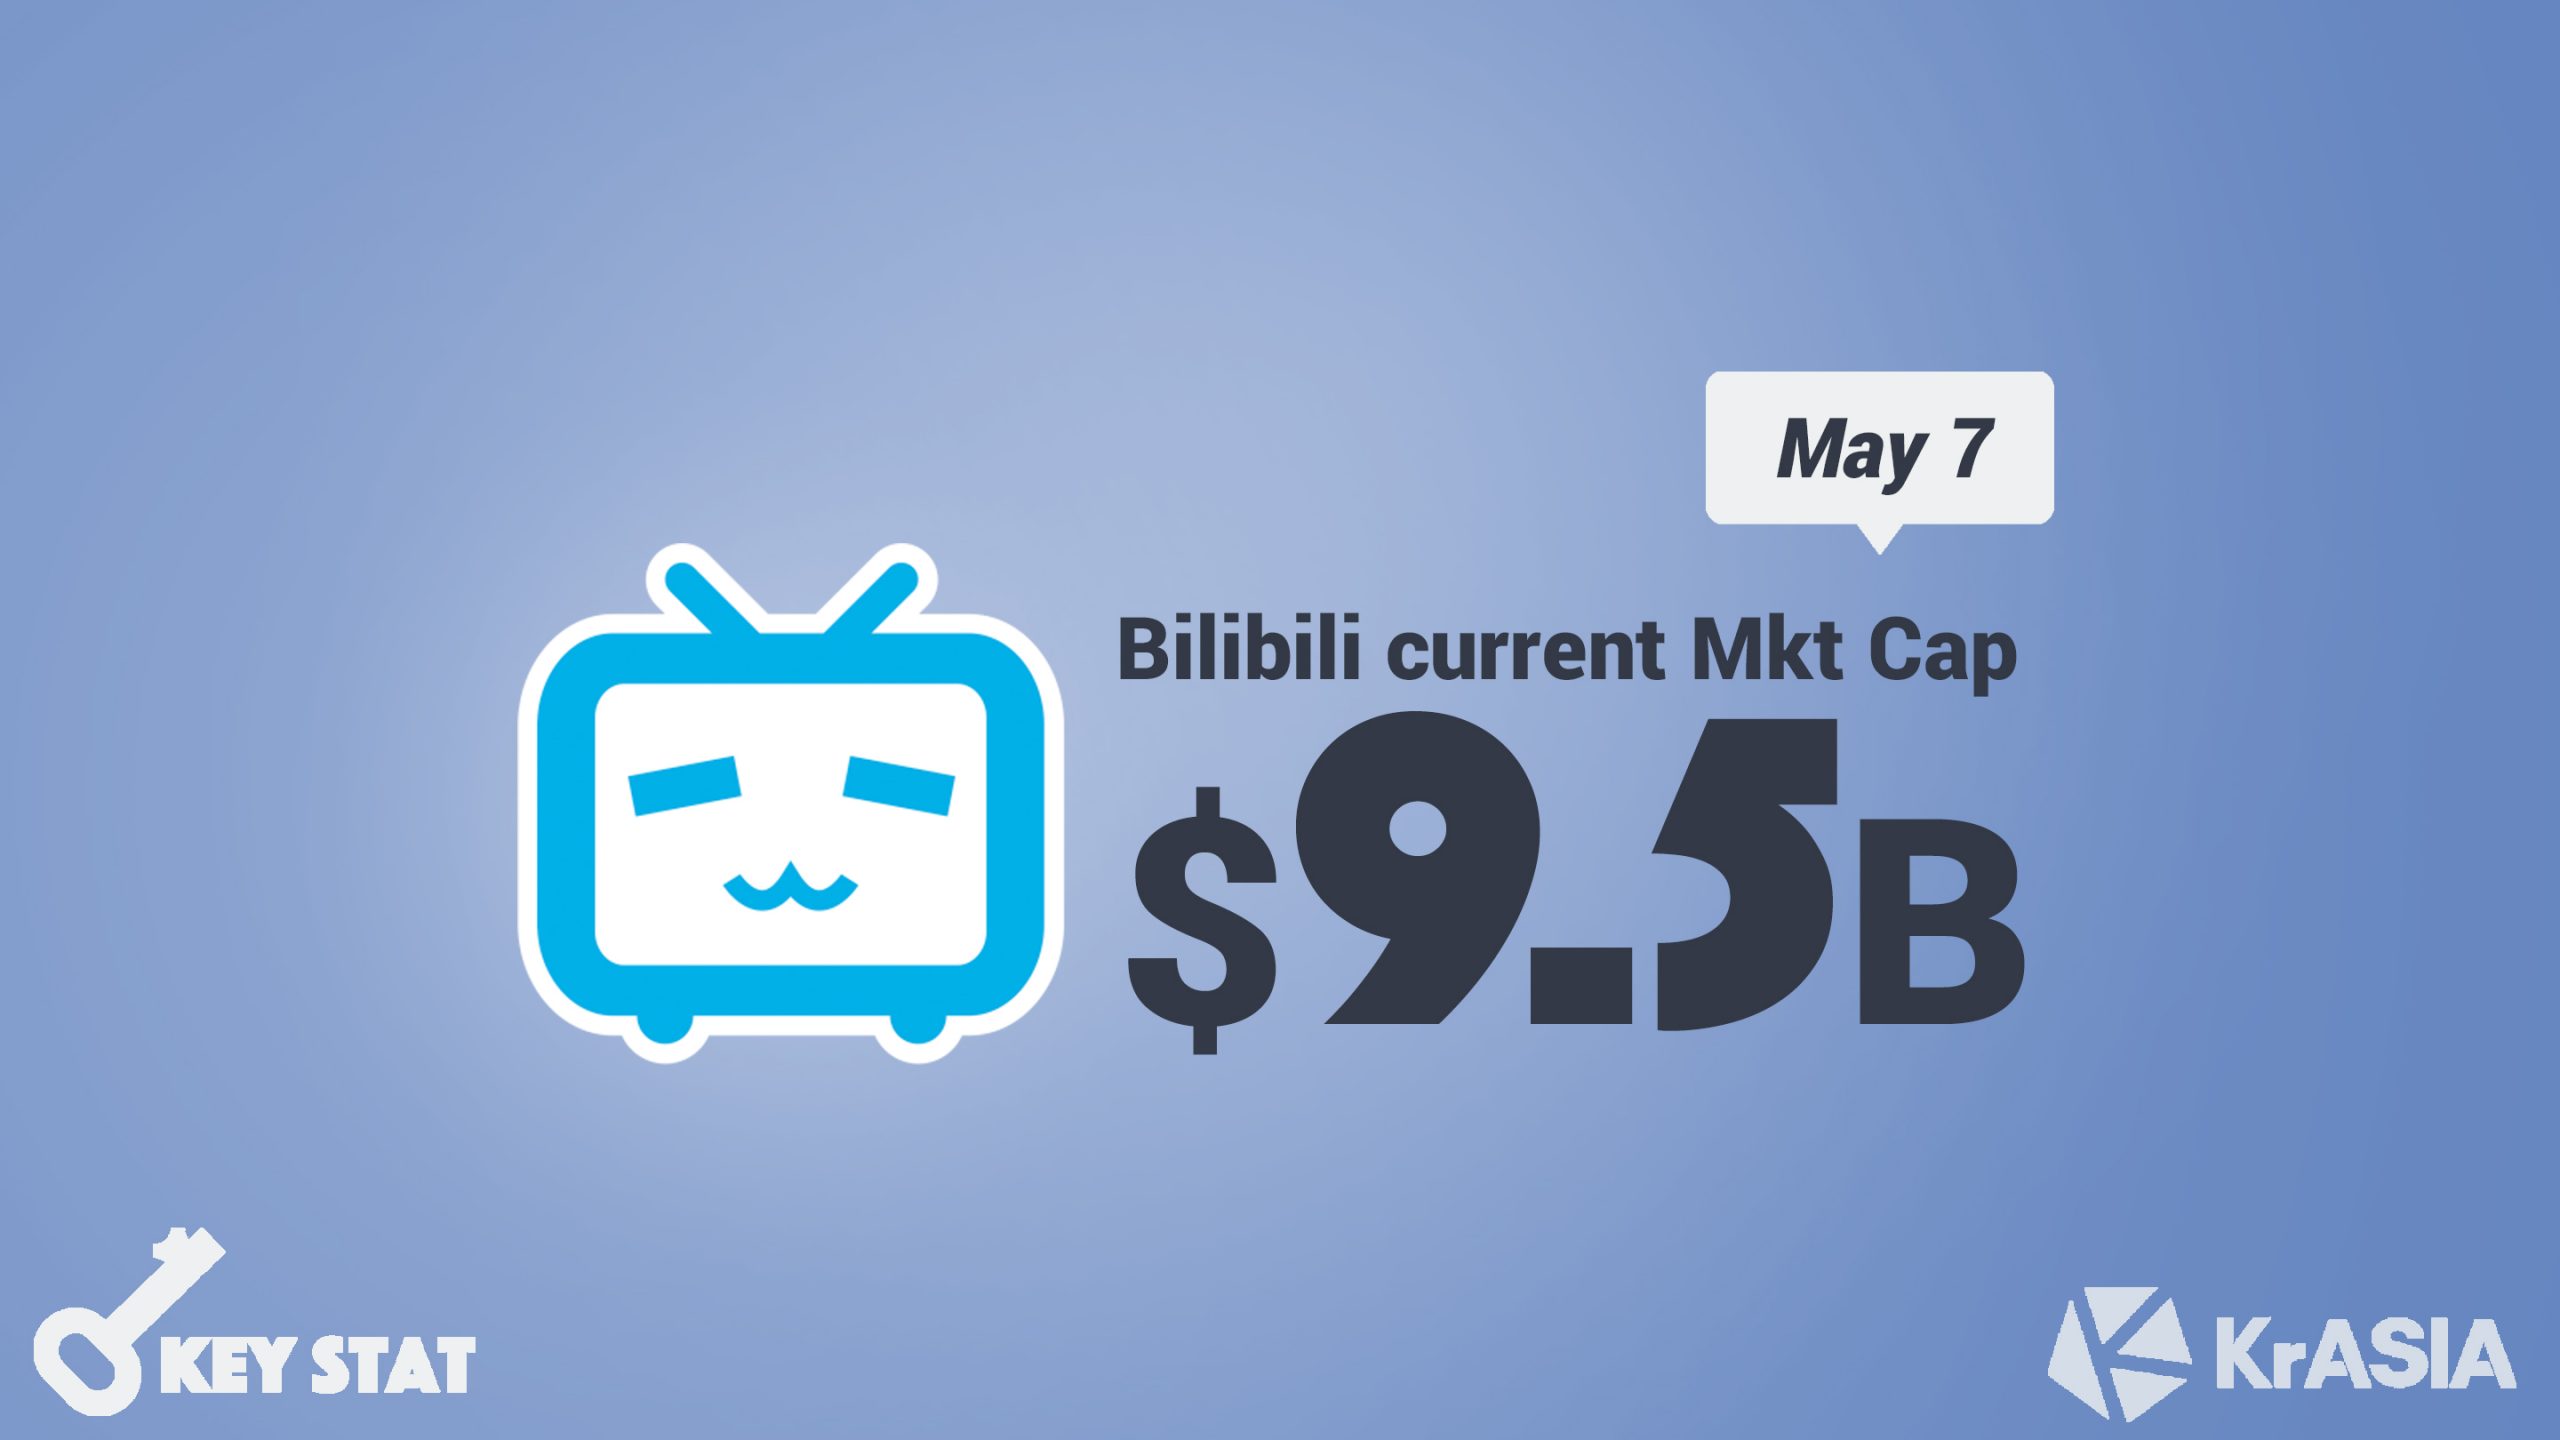 KEY STAT | Bilibili’s market capital increased USD 480 million in one day